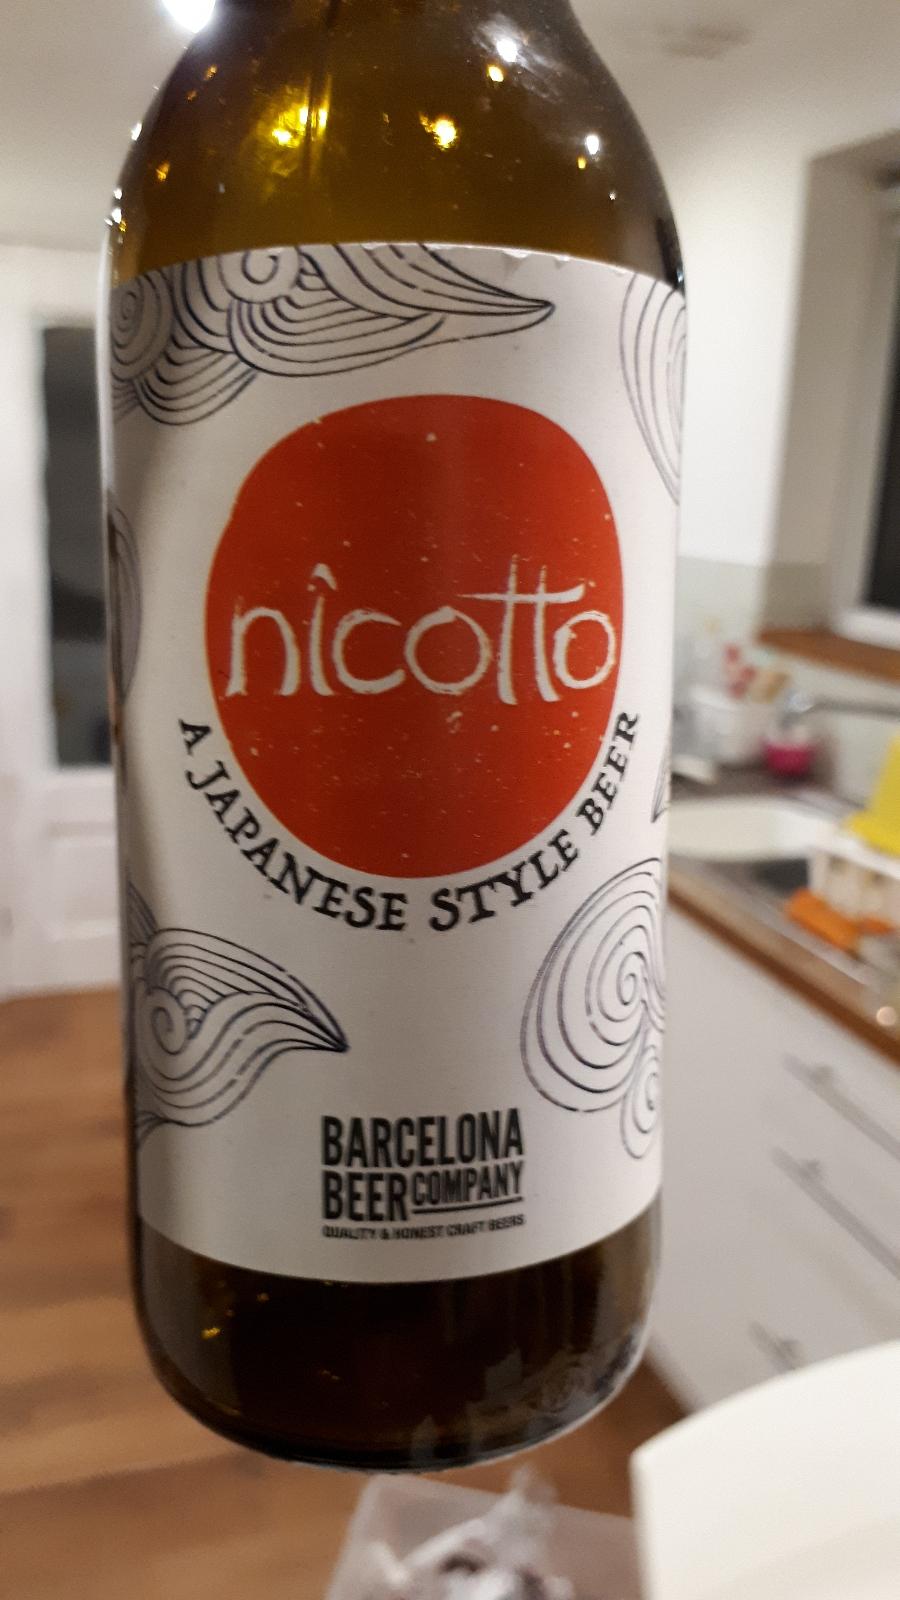 Nicotto